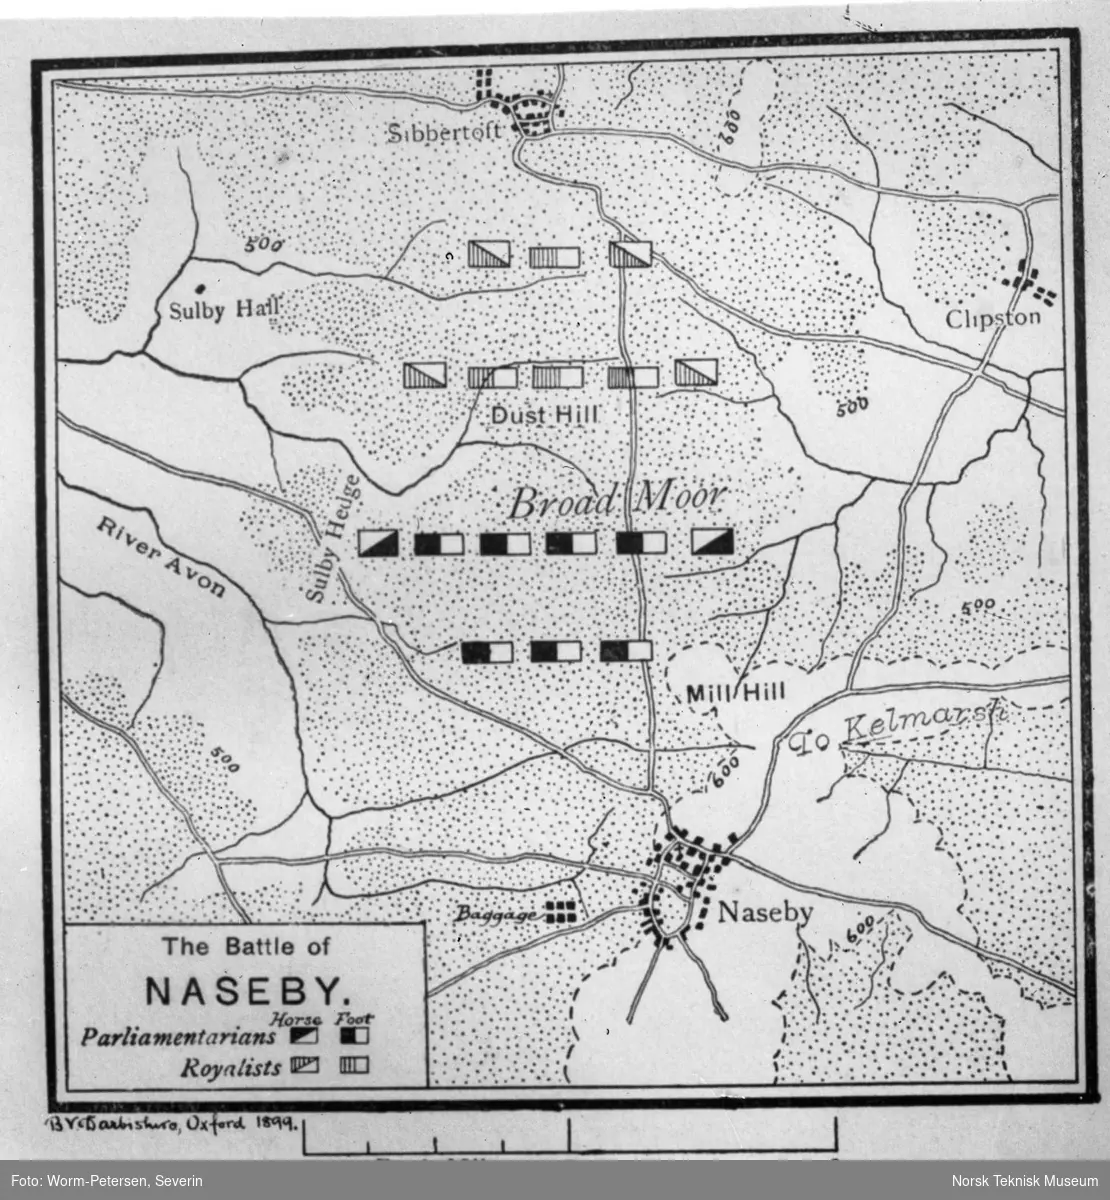 Kart over slaget ved Naseby, mellom parlamentarister og royalister.